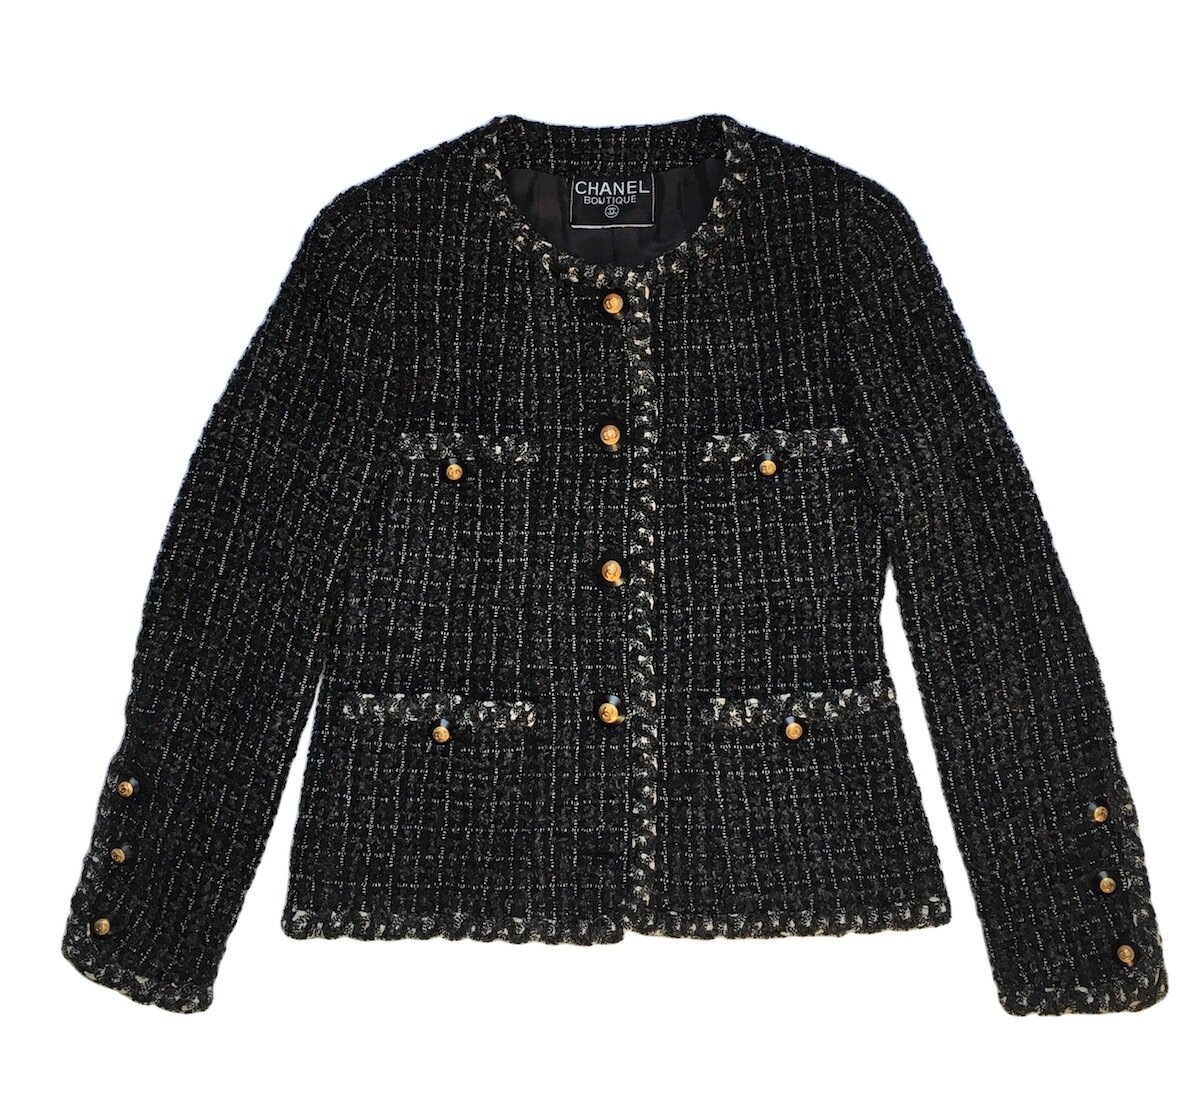 Chanel Tweed Classic Jacket Black & Cream w Gold Thread France 38 US  2-4